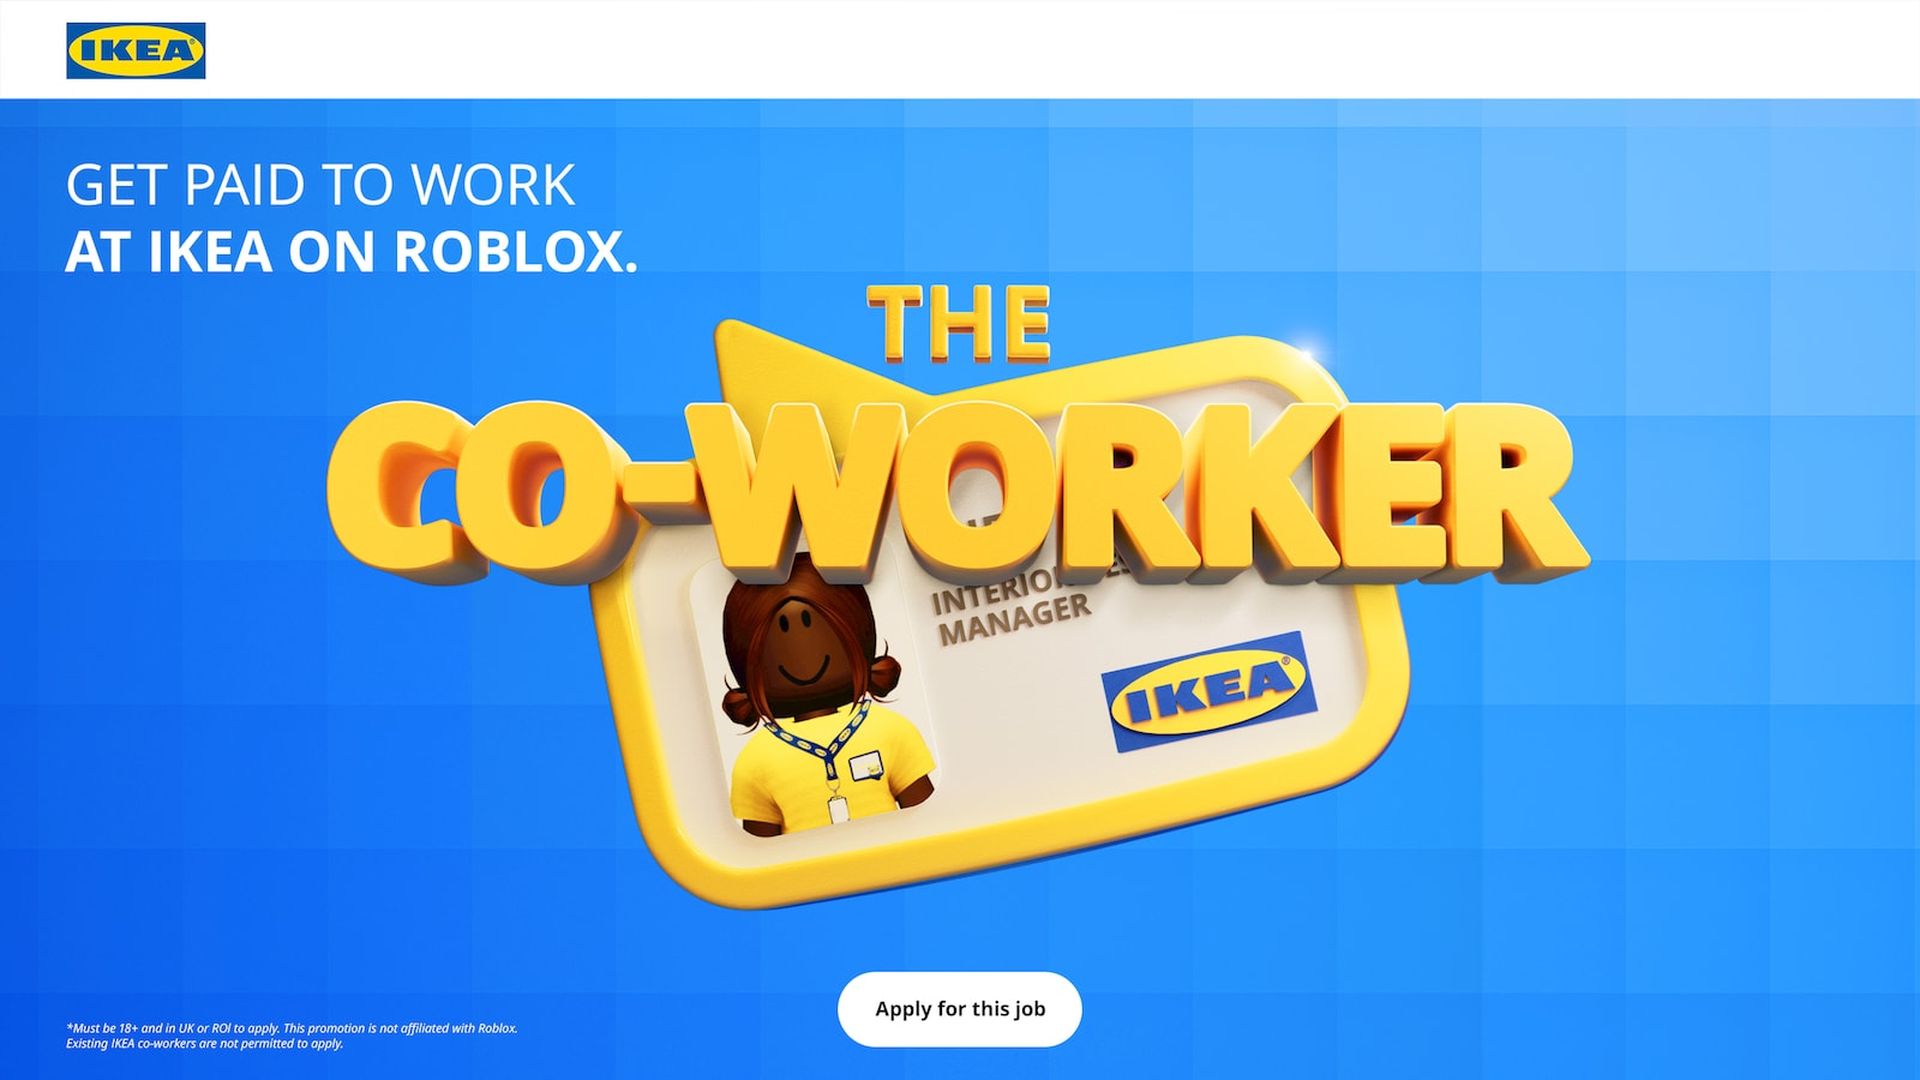 Comment postuler à un emploi Roblox IKEA ?